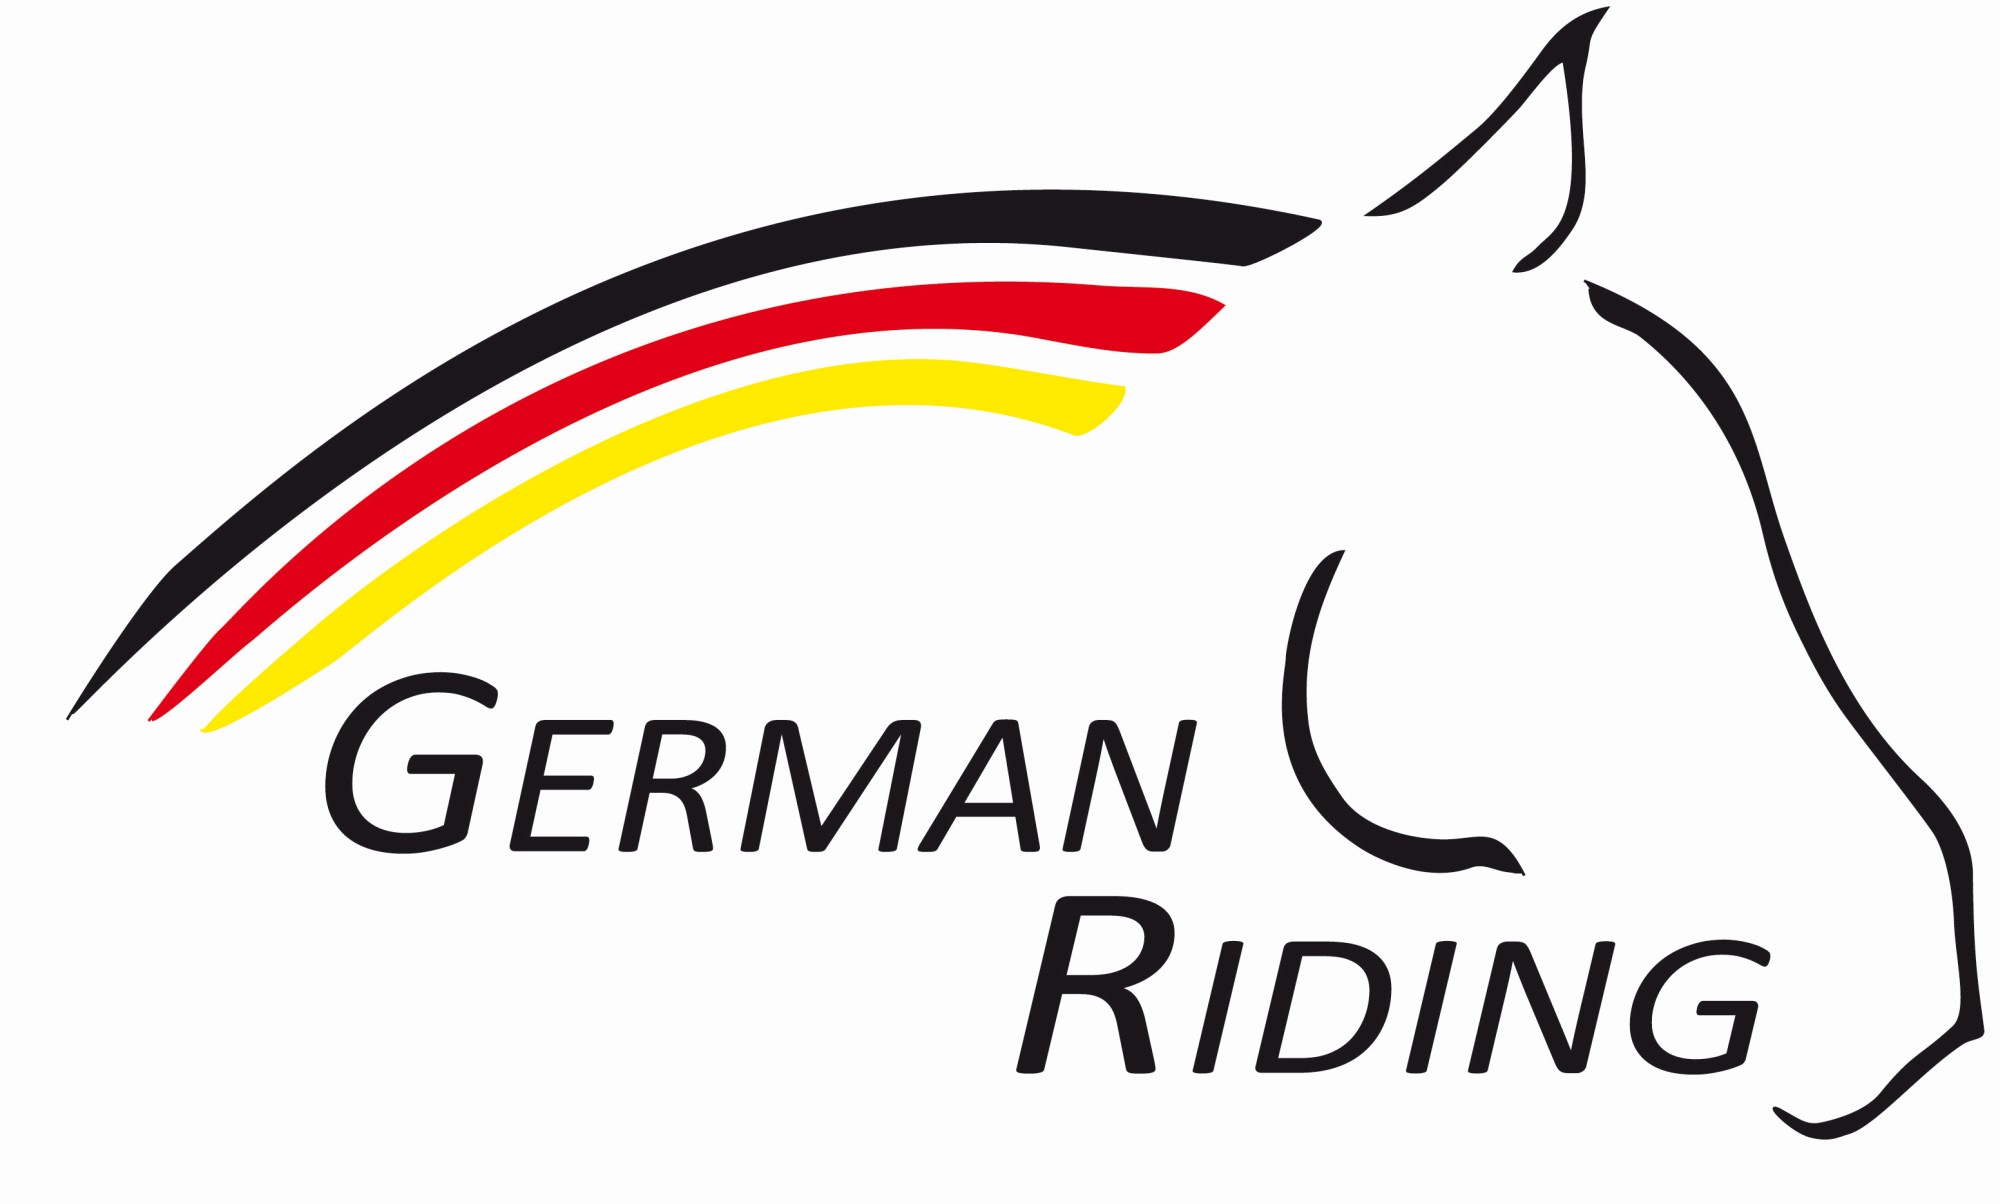 German Riding